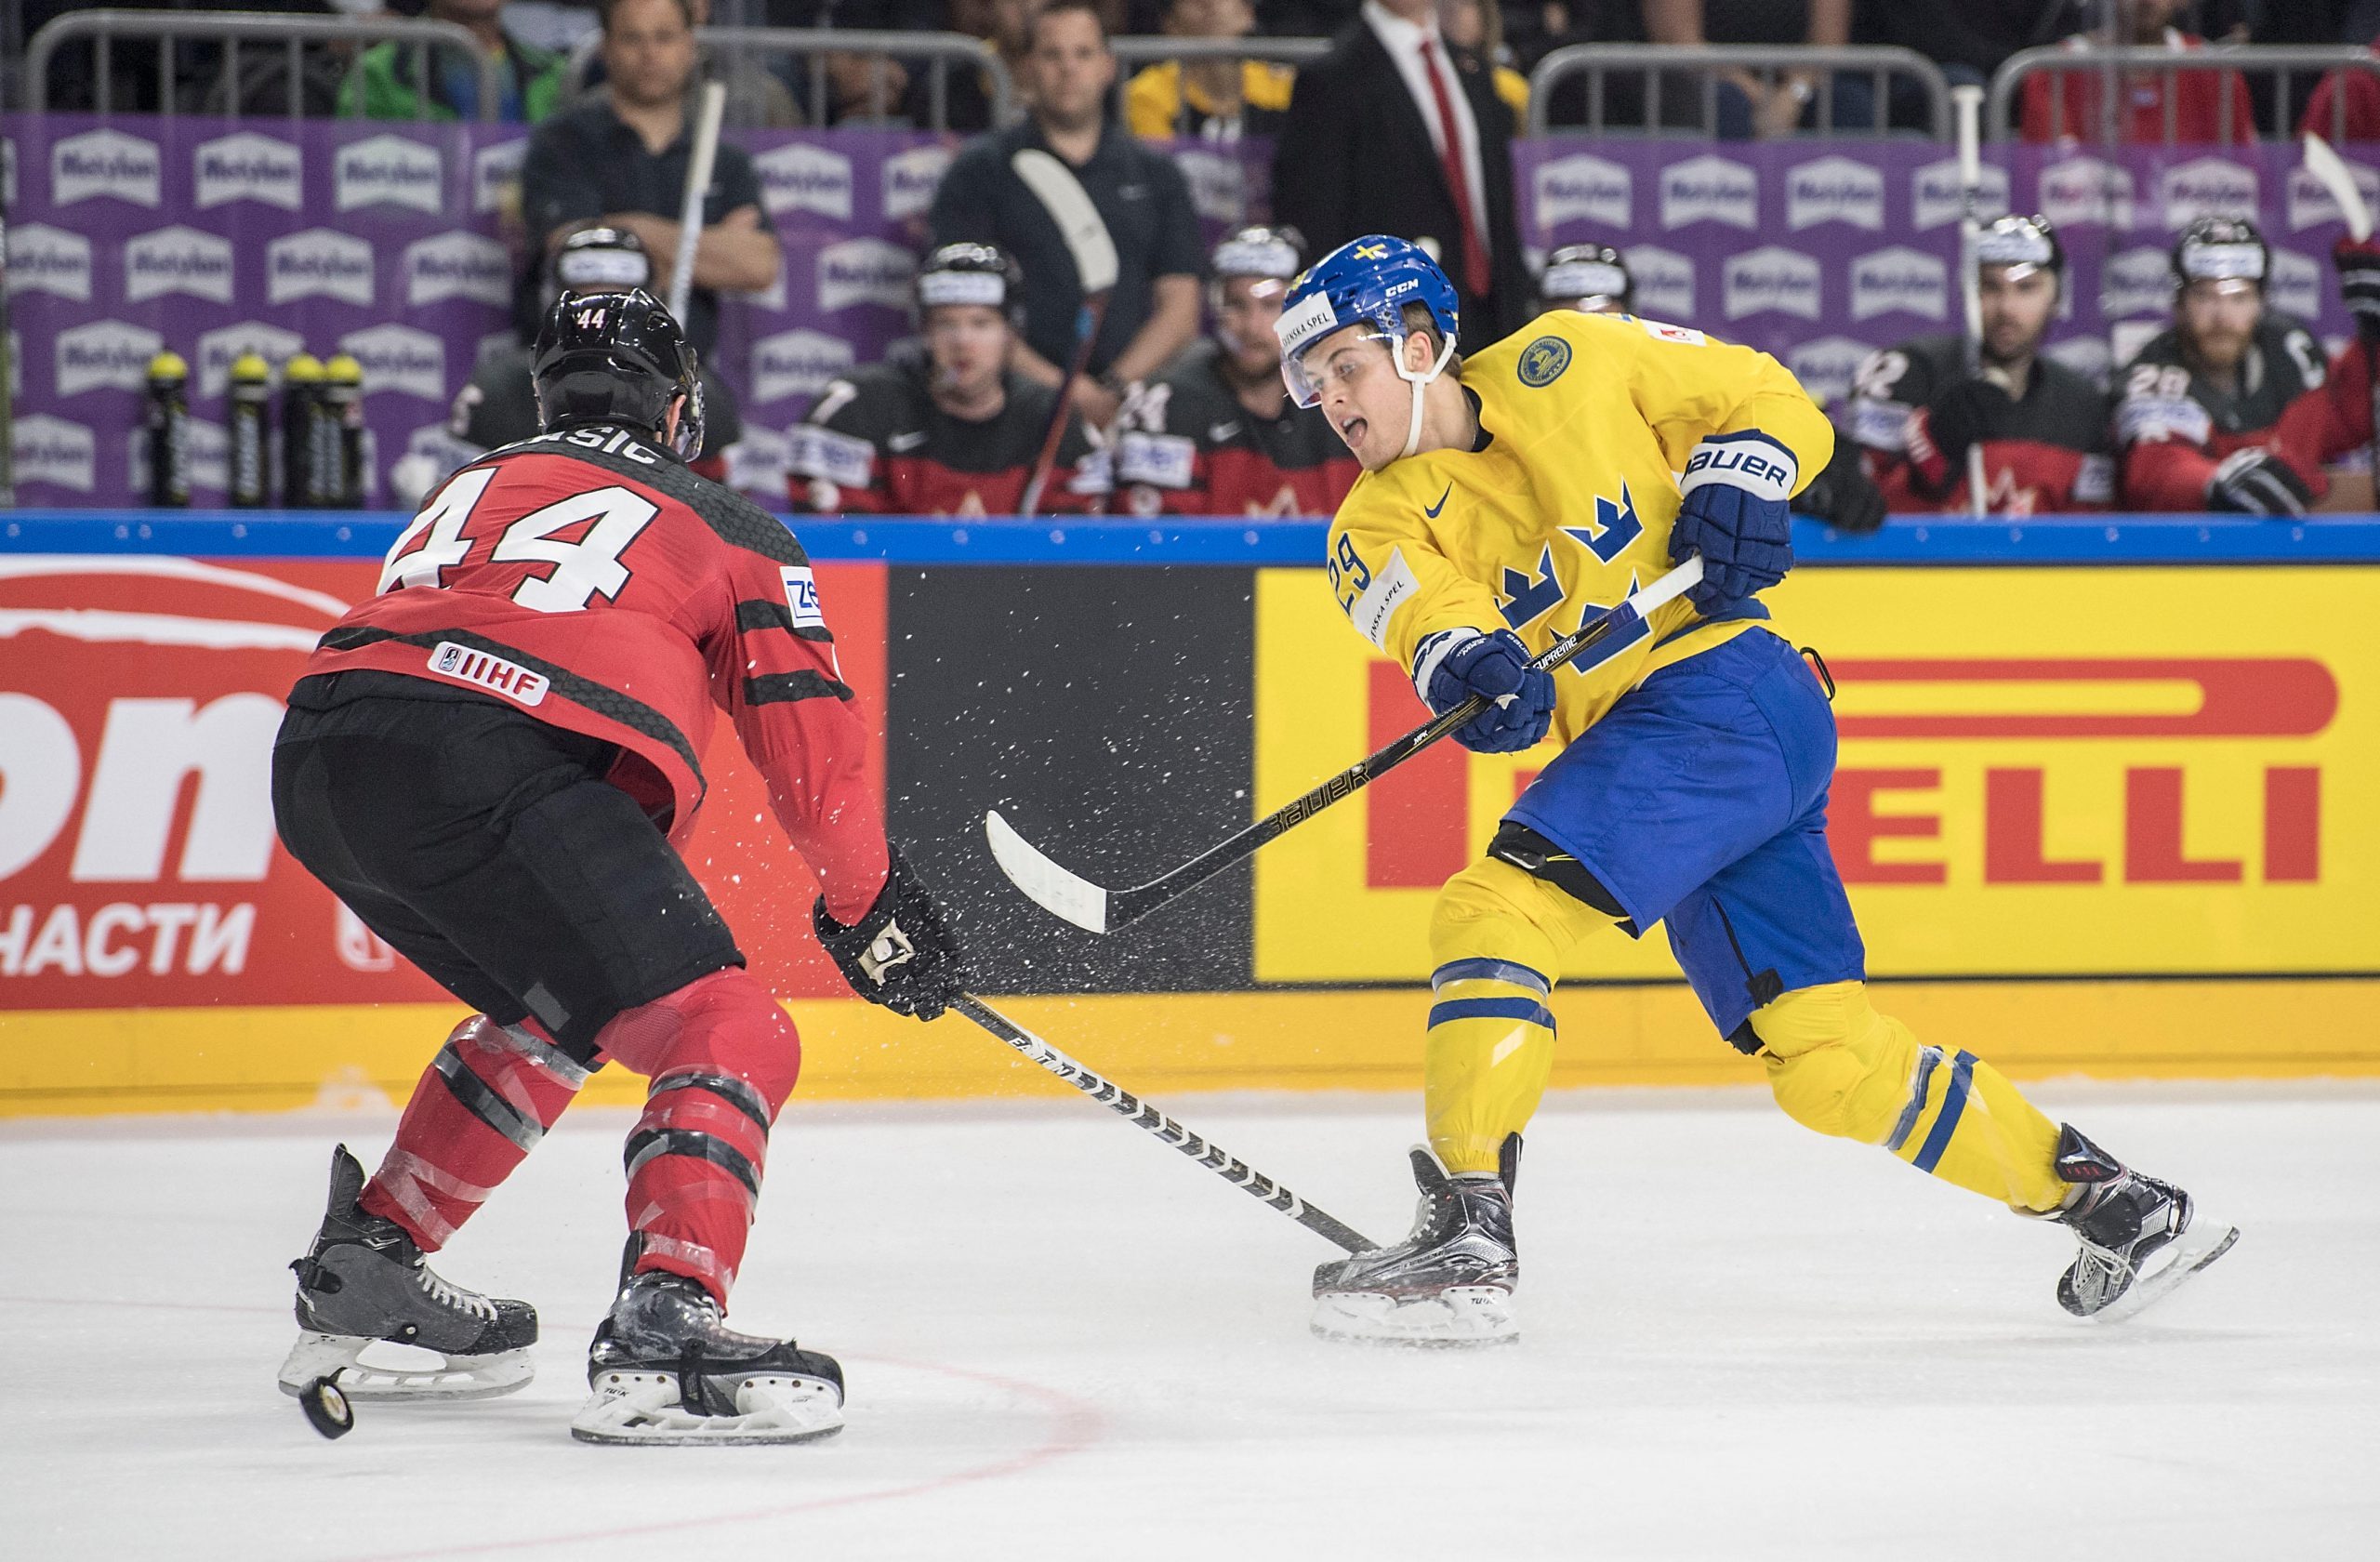 Streama Sverige – Kanada: Se live stream & TV (Hockey VM 2022)